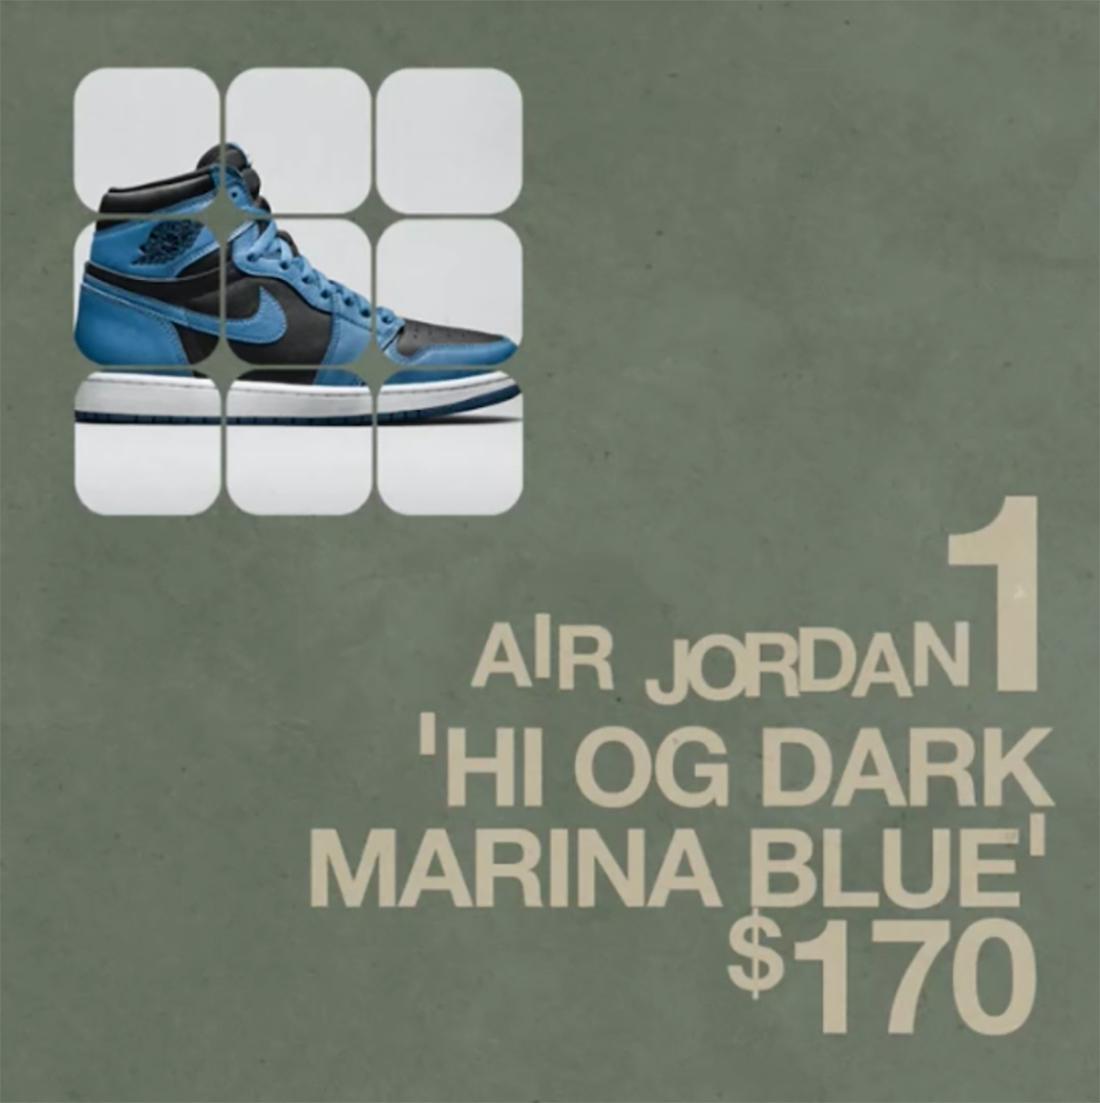 Air Jordan 1 Dark Marina Blue Release Date